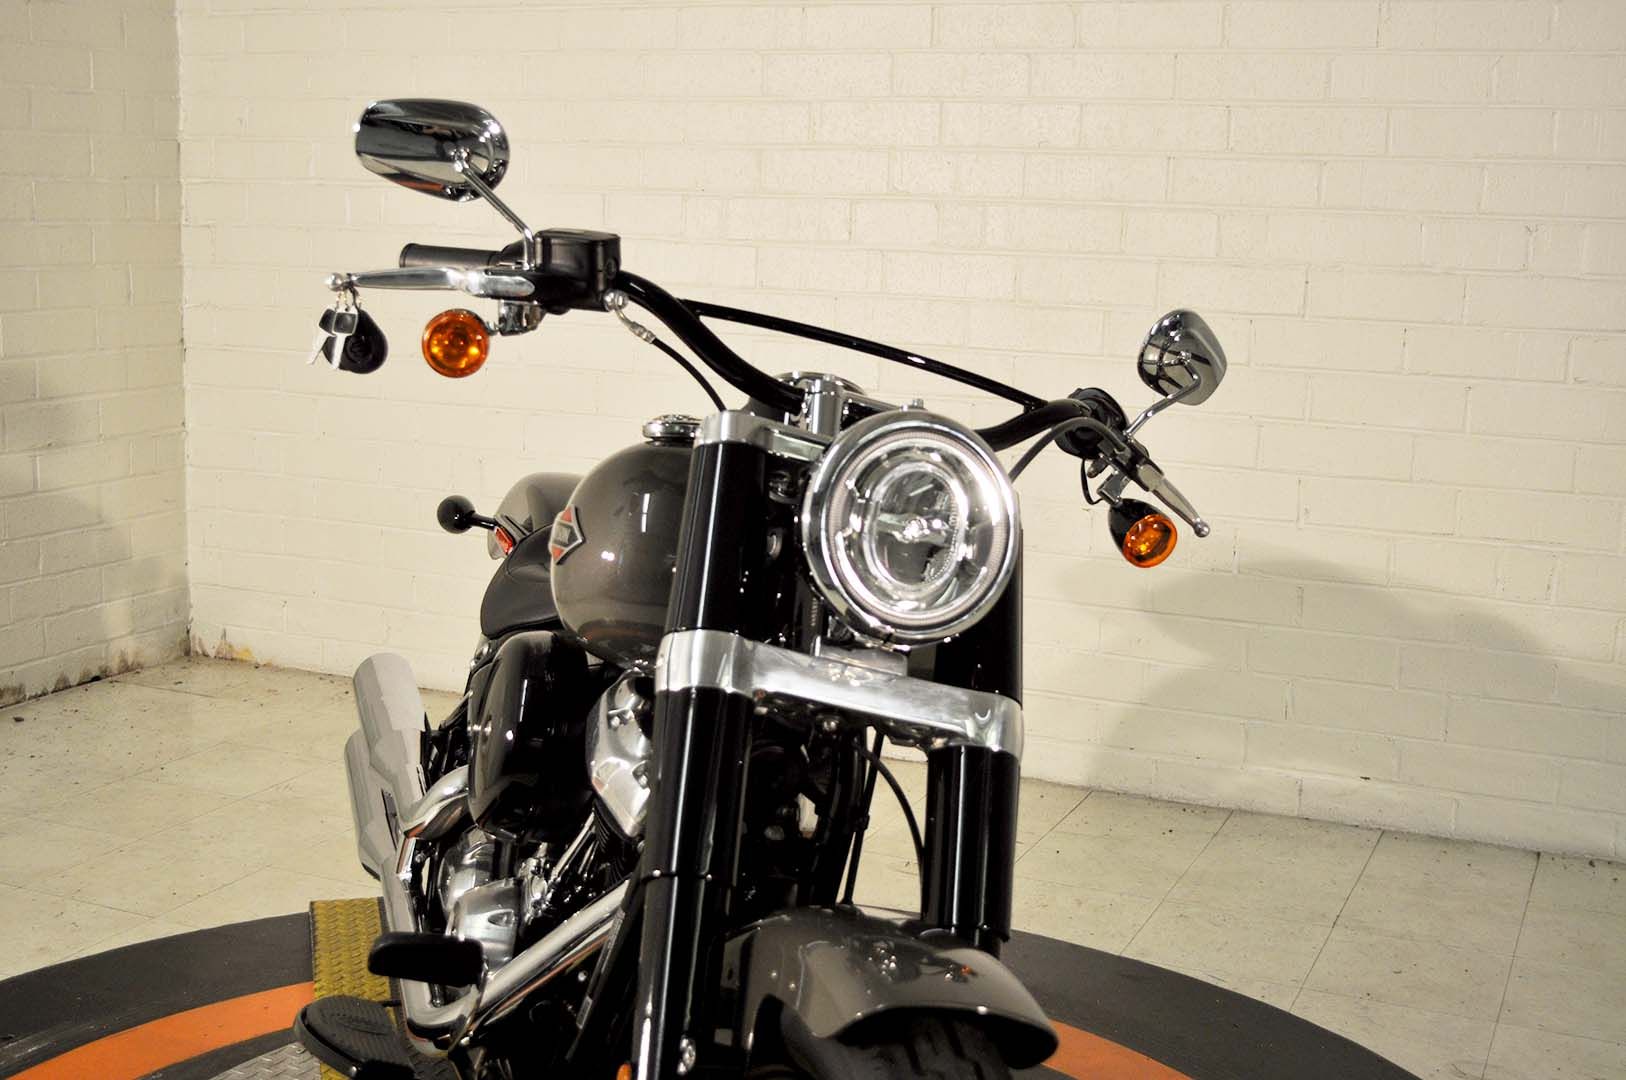 2019 Harley-Davidson Softail Slim® in Winston Salem, North Carolina - Photo 10